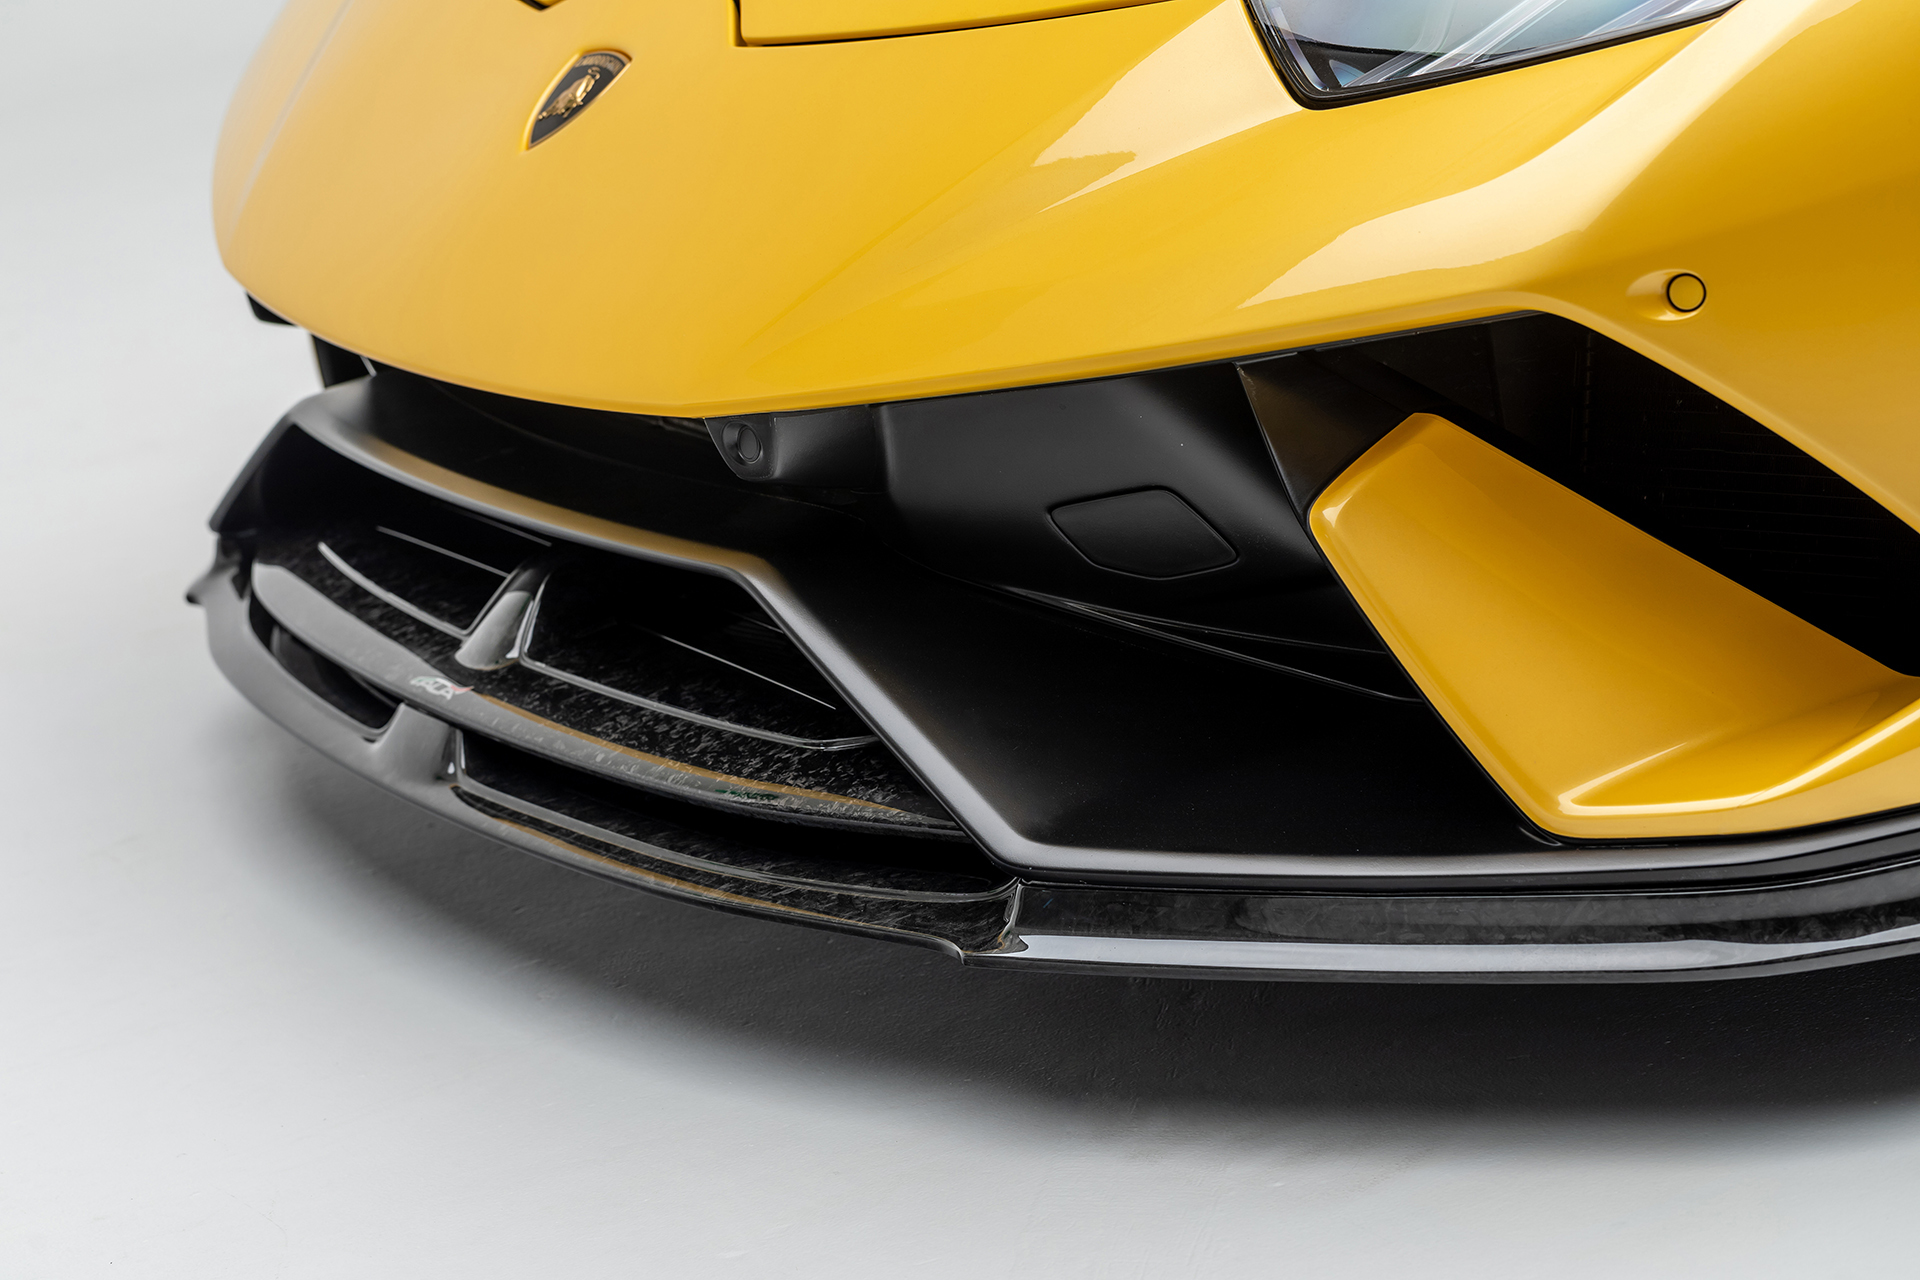 Vorsteiner Nero body kit for Lamborghini Huracan Vincenzo latest model